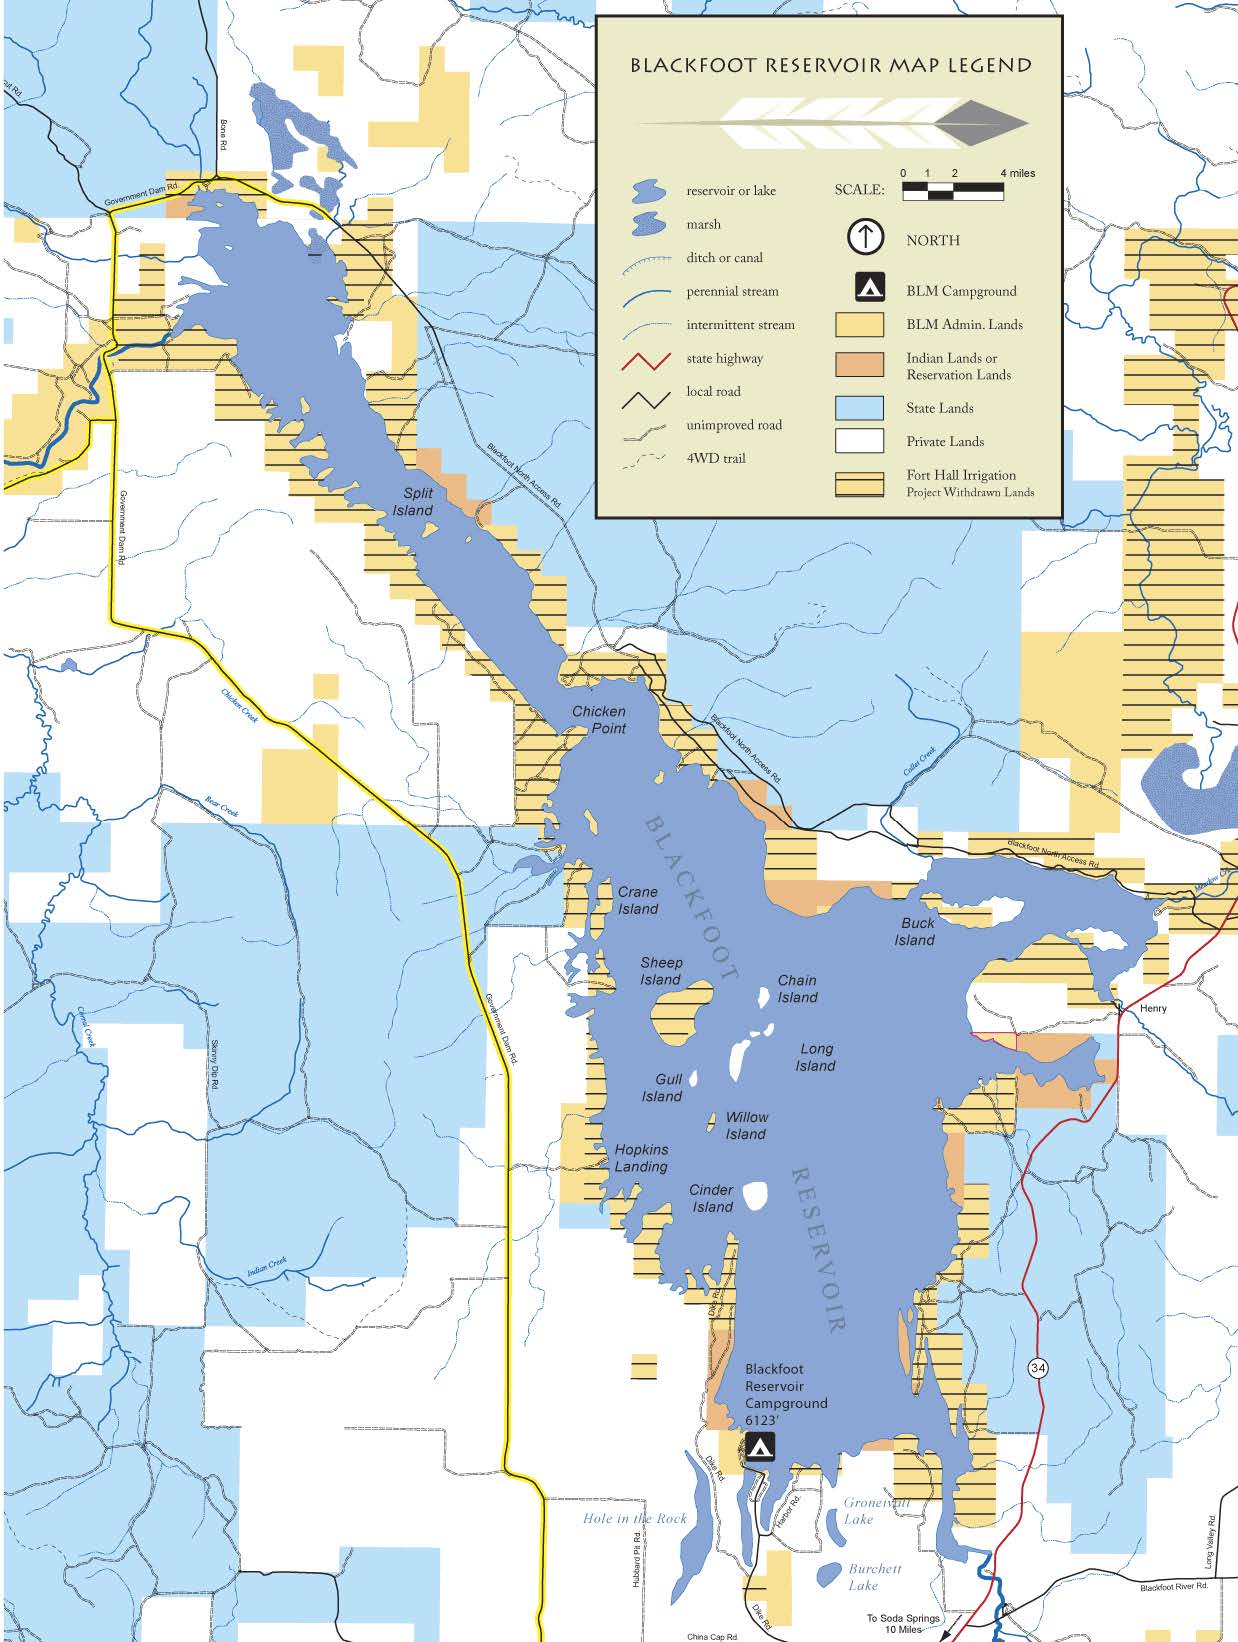 Public Room Media Center Idaho Blackfoot River Recreation Map Bureau Of Land Management 9476